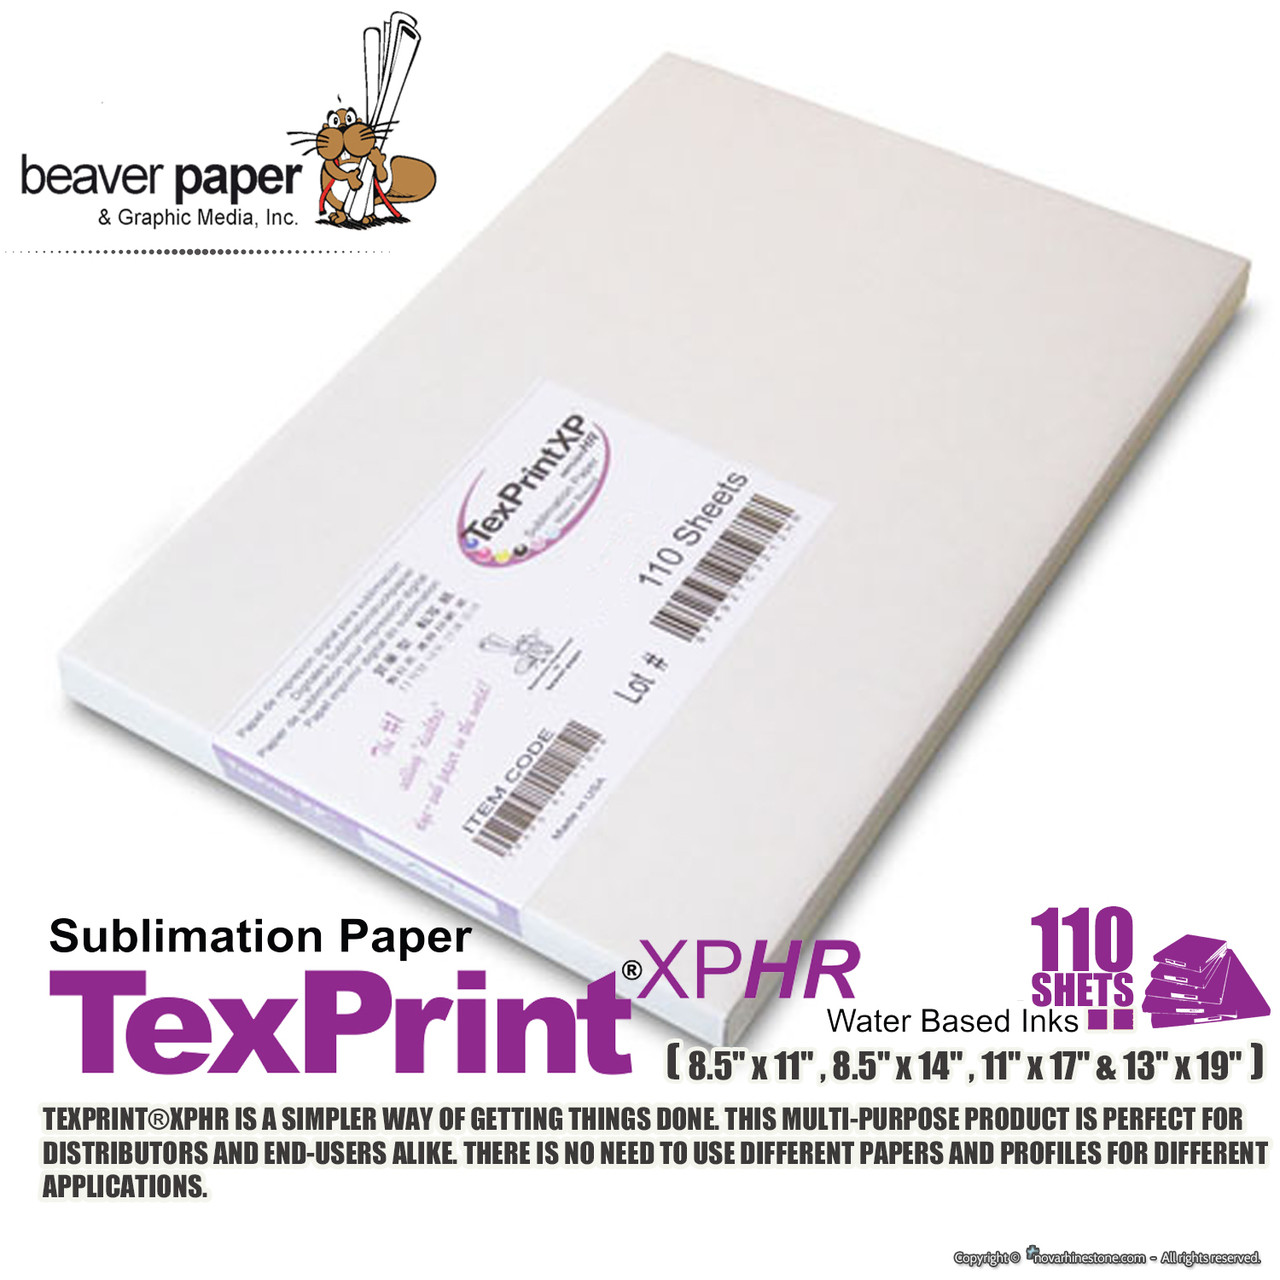 TexPrint DT Heavy Sublimation Paper - 110 Sheets